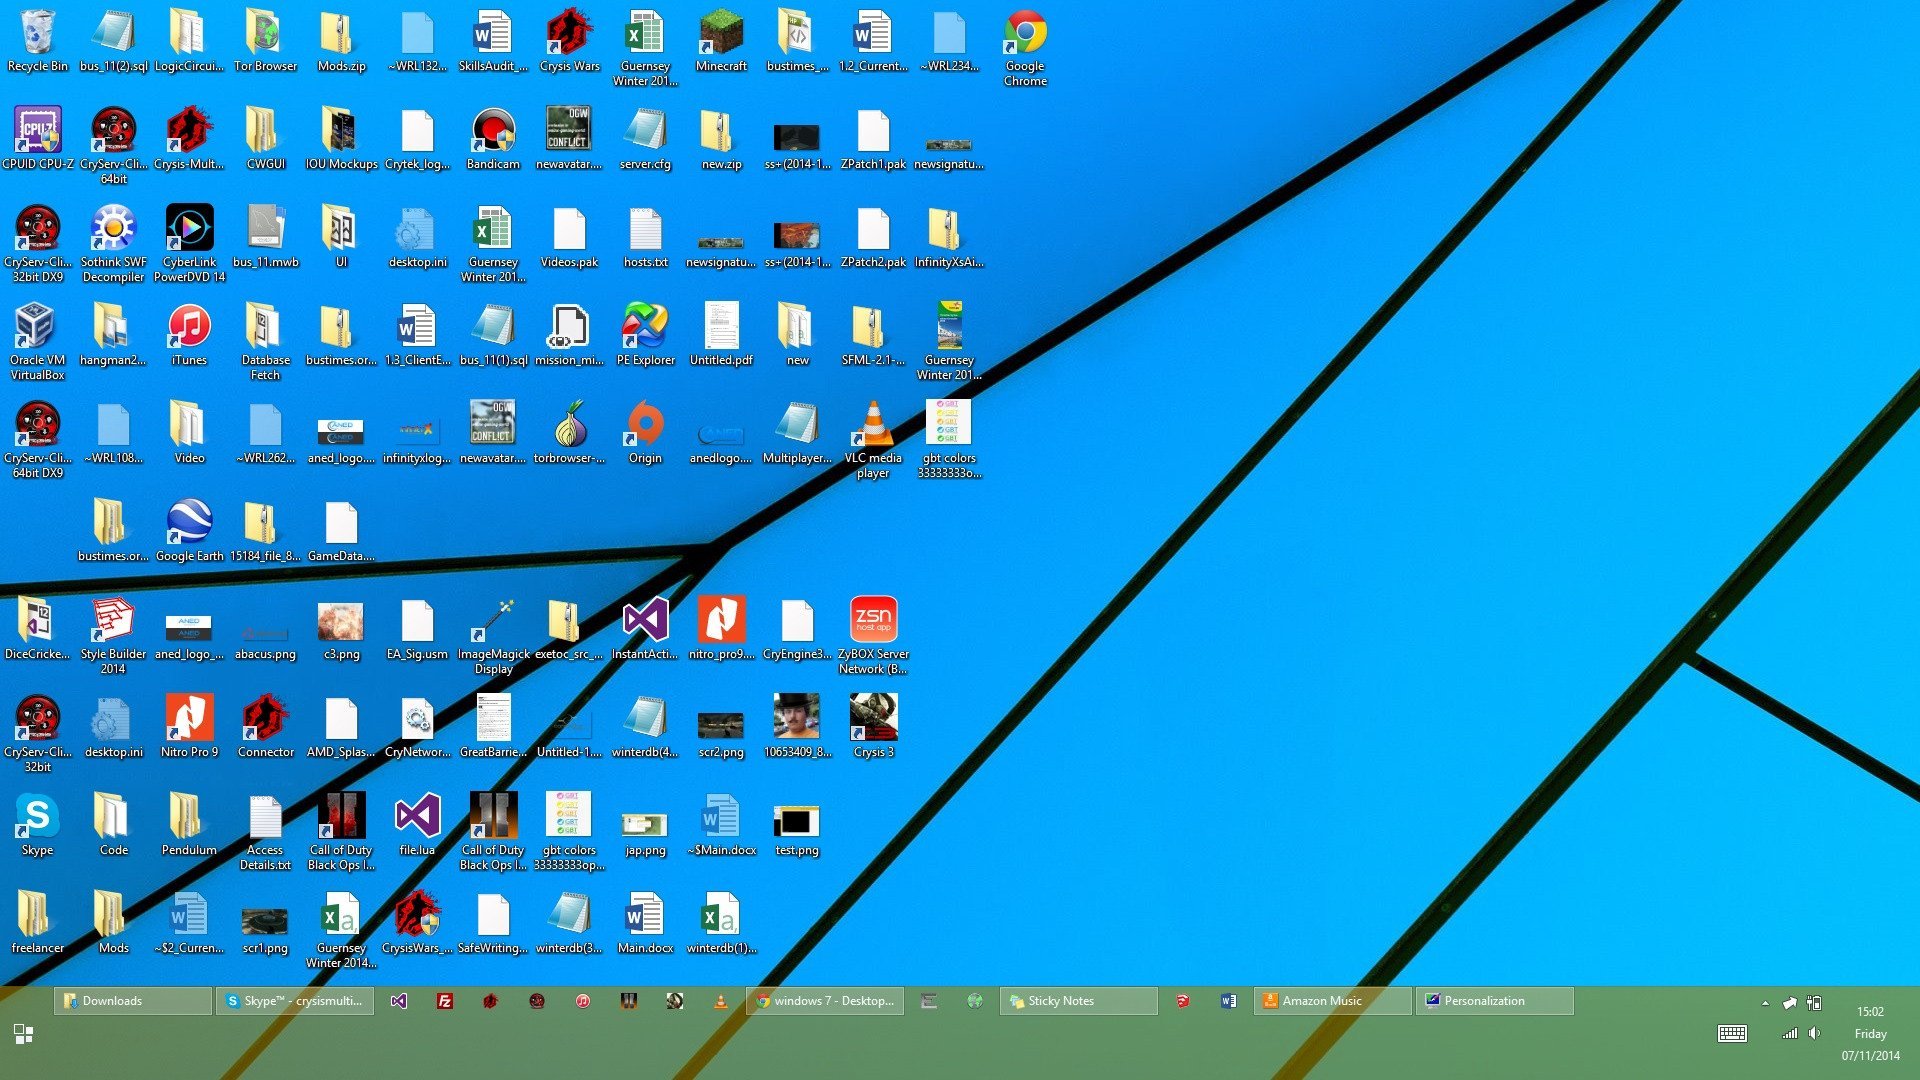 Найти значки на экран. Иконки на рабочий стол. Ярлыки на рабочем столе. Экран компьютера с приложениями. Windows 8 рабочий стол.